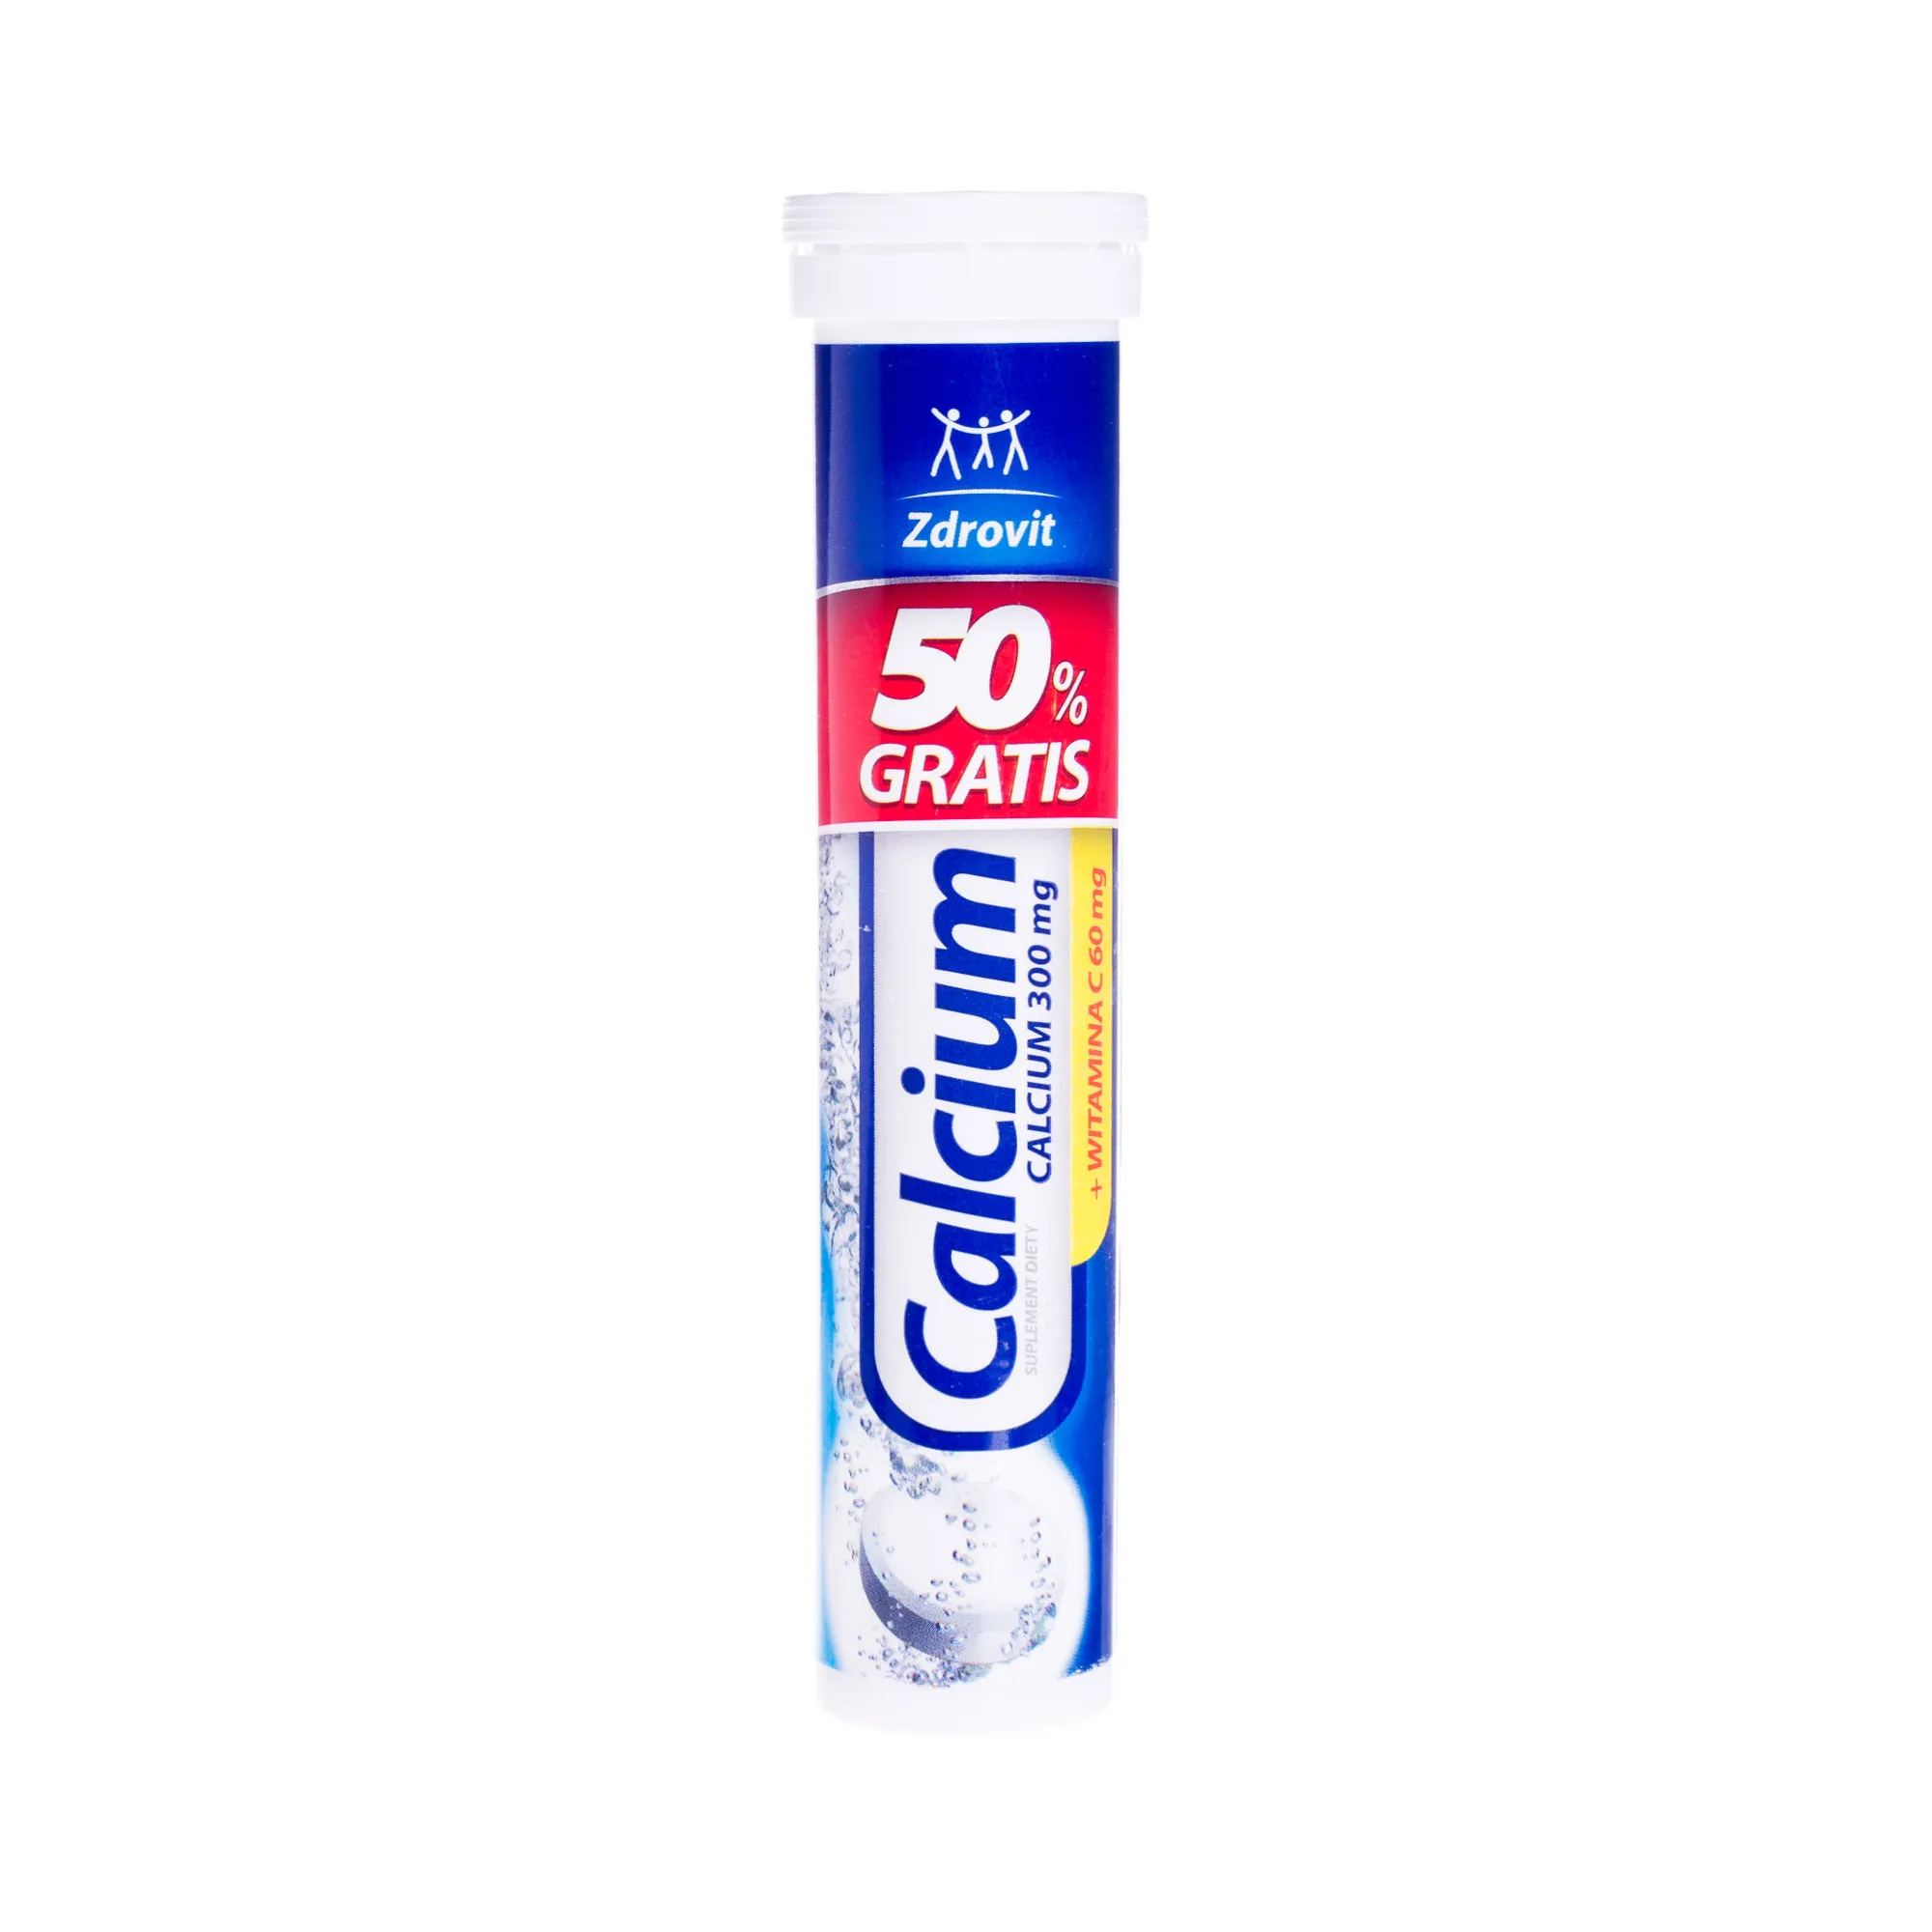 Zdrovit Calcium 300 mg + Witamina C 60 mg, suplement diety, 20 tabletek musujących